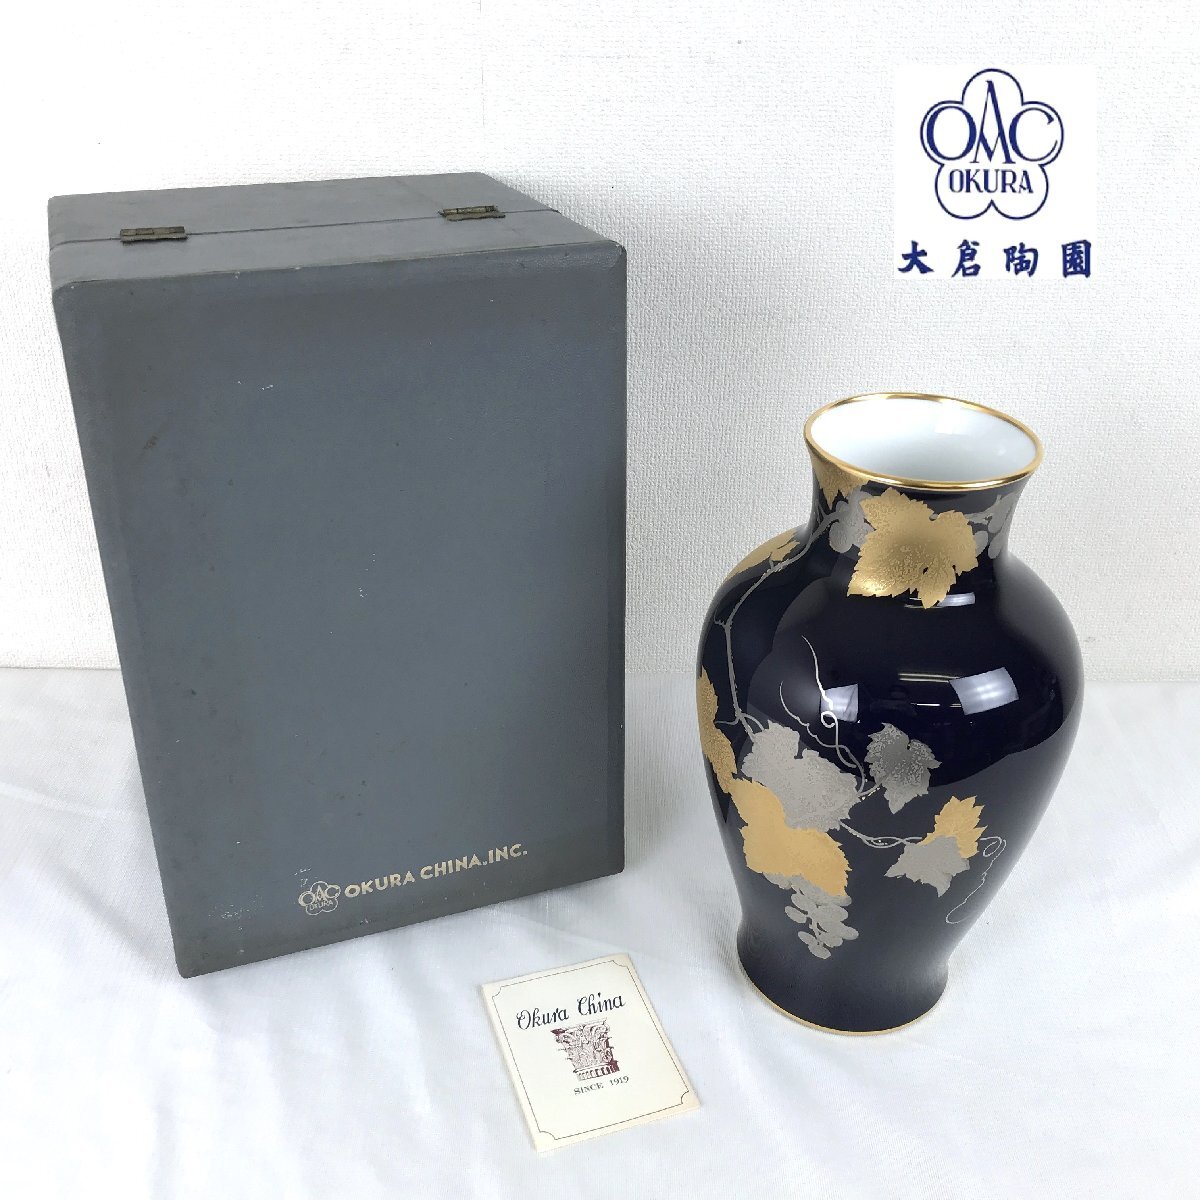 1203 OKURA 大倉陶園 花瓶 金蝕バラ 金彩 瑠璃色 葡萄図 高さ27.5cm 花器 花びん フラワーベース 箱付き